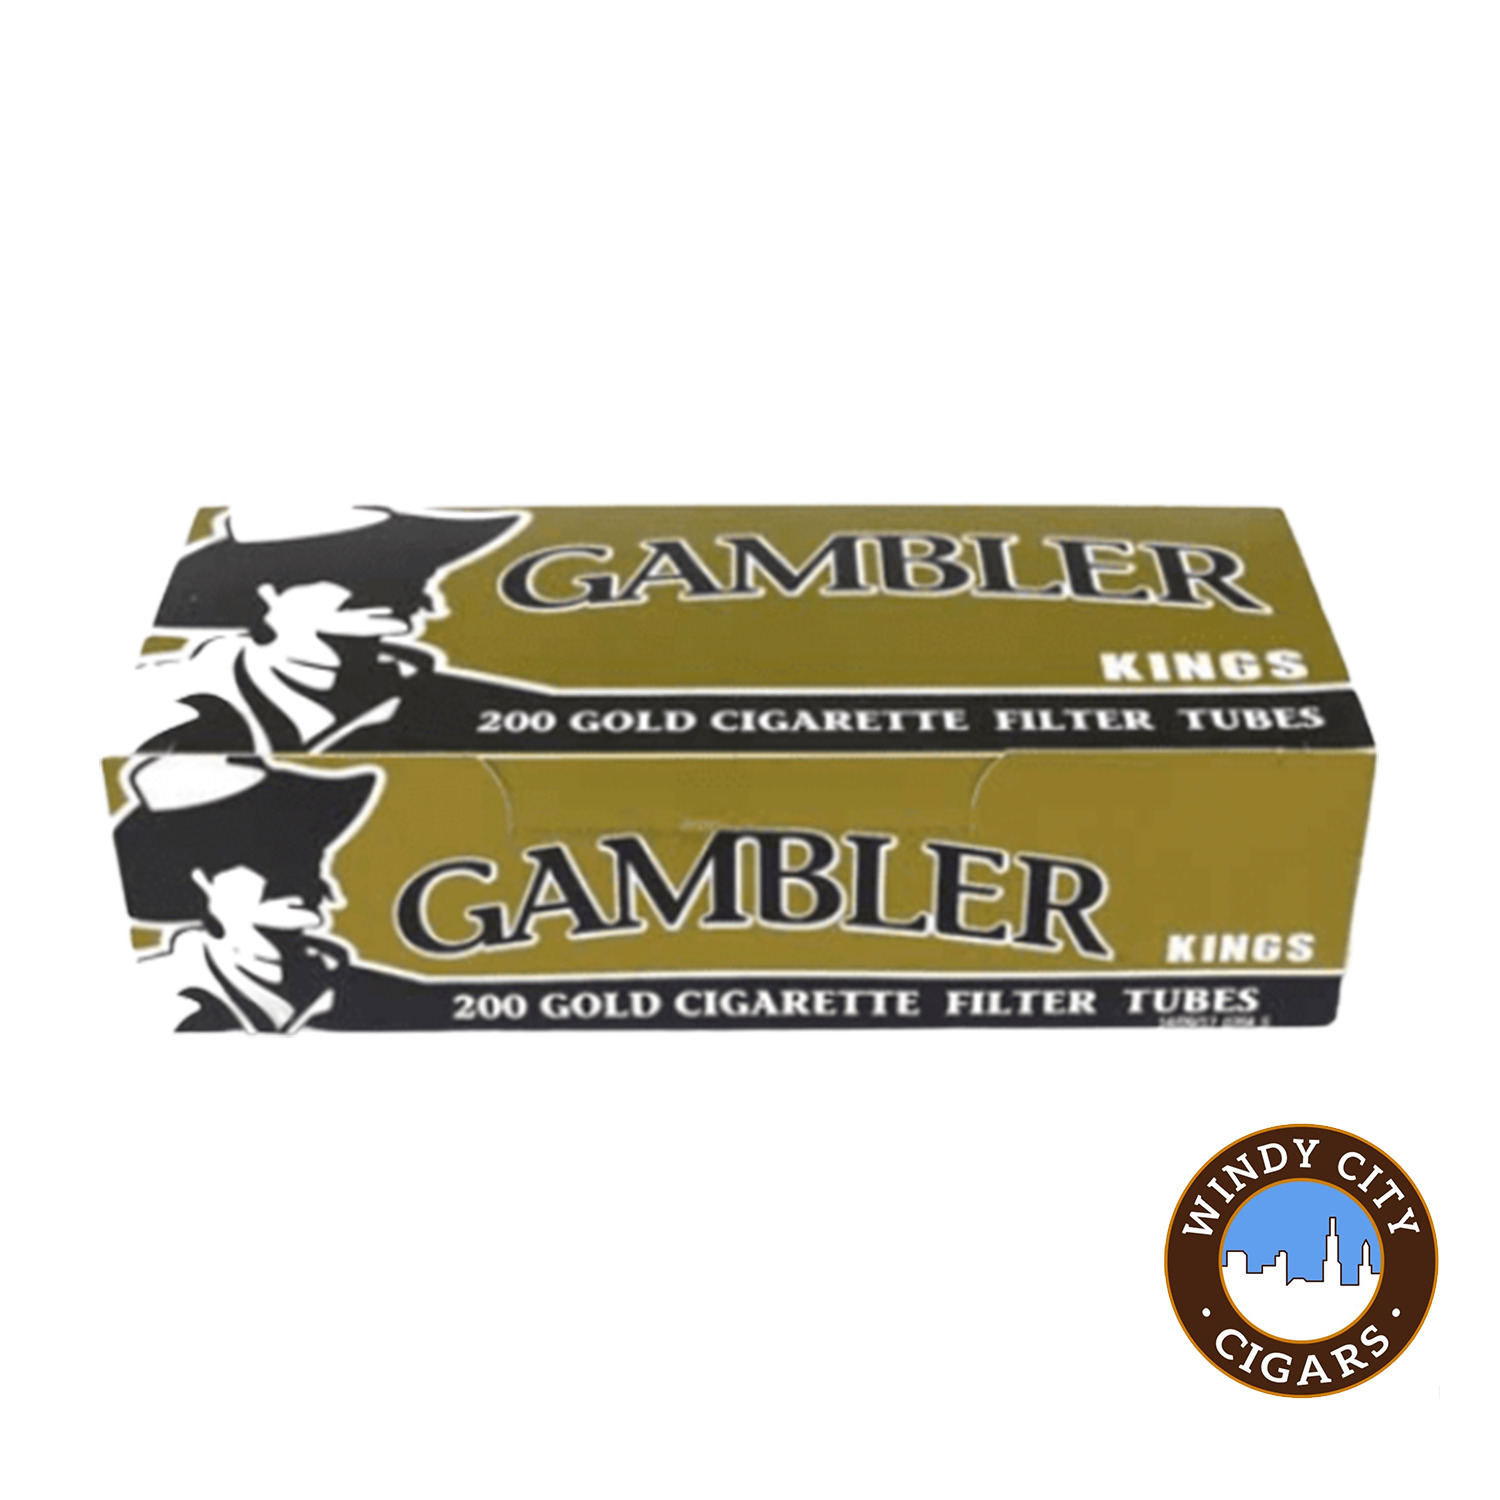 Gambler Gold King Cigarette 200ct Tubes - 5 Boxes